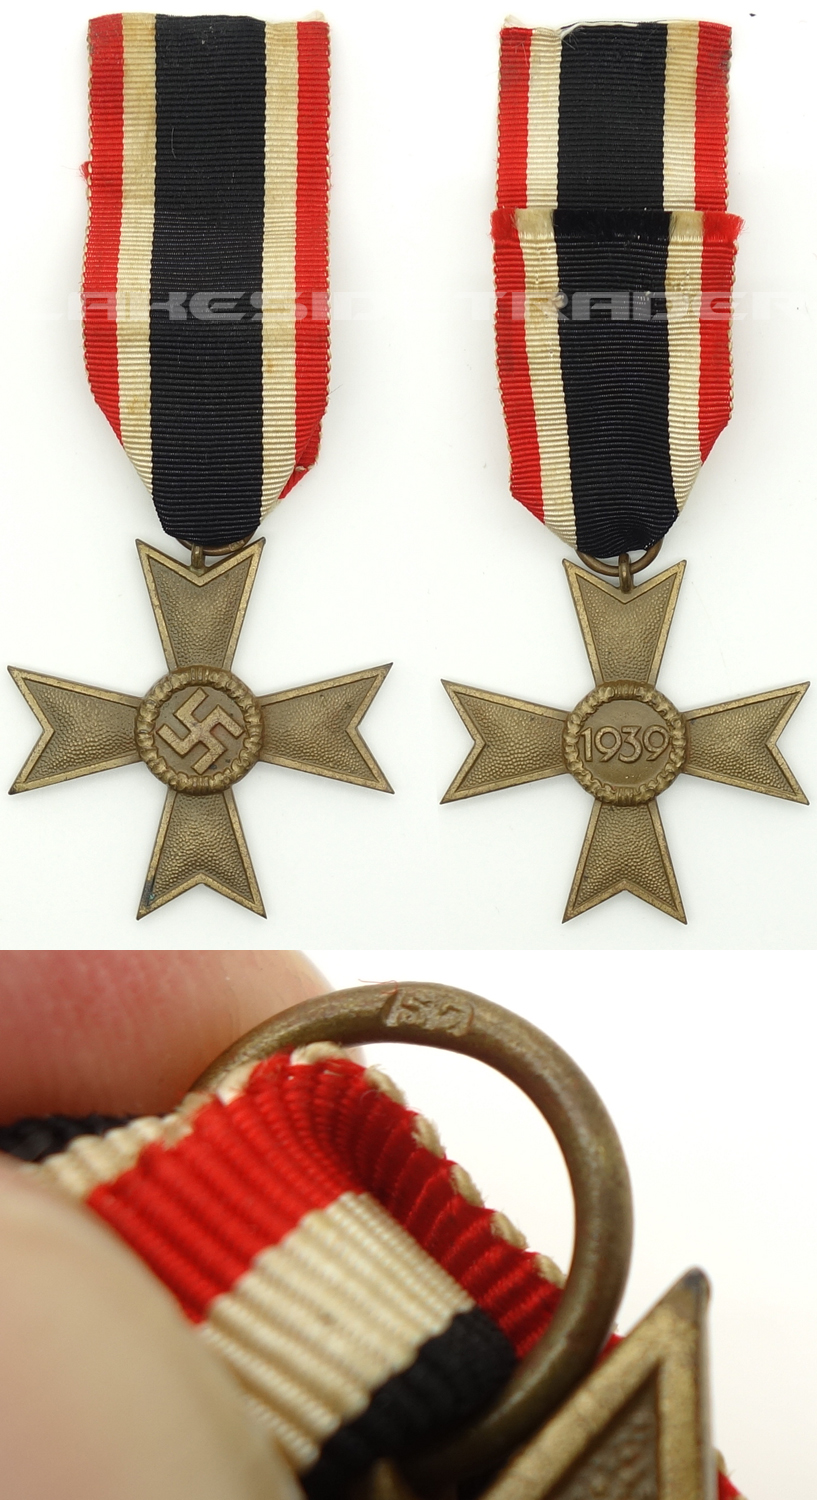 2nd Class War Merit Cross without Swords by 57